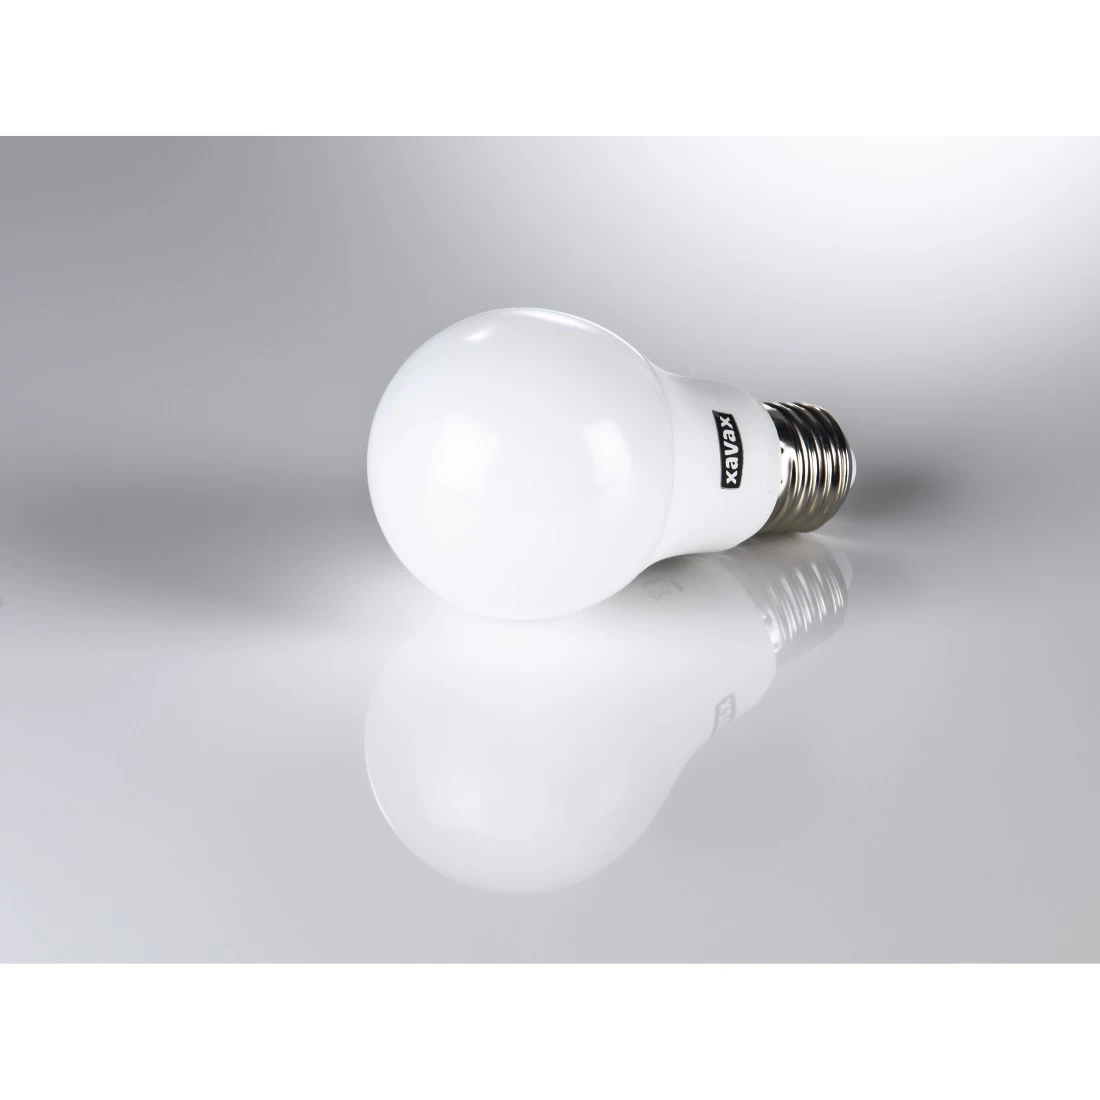 abx3 Druckfähige Abbildung 3 - Xavax, LED-Lampe, E27, 806lm ersetzt 60W, Glühlampe, Warmweiß, 2 Stück